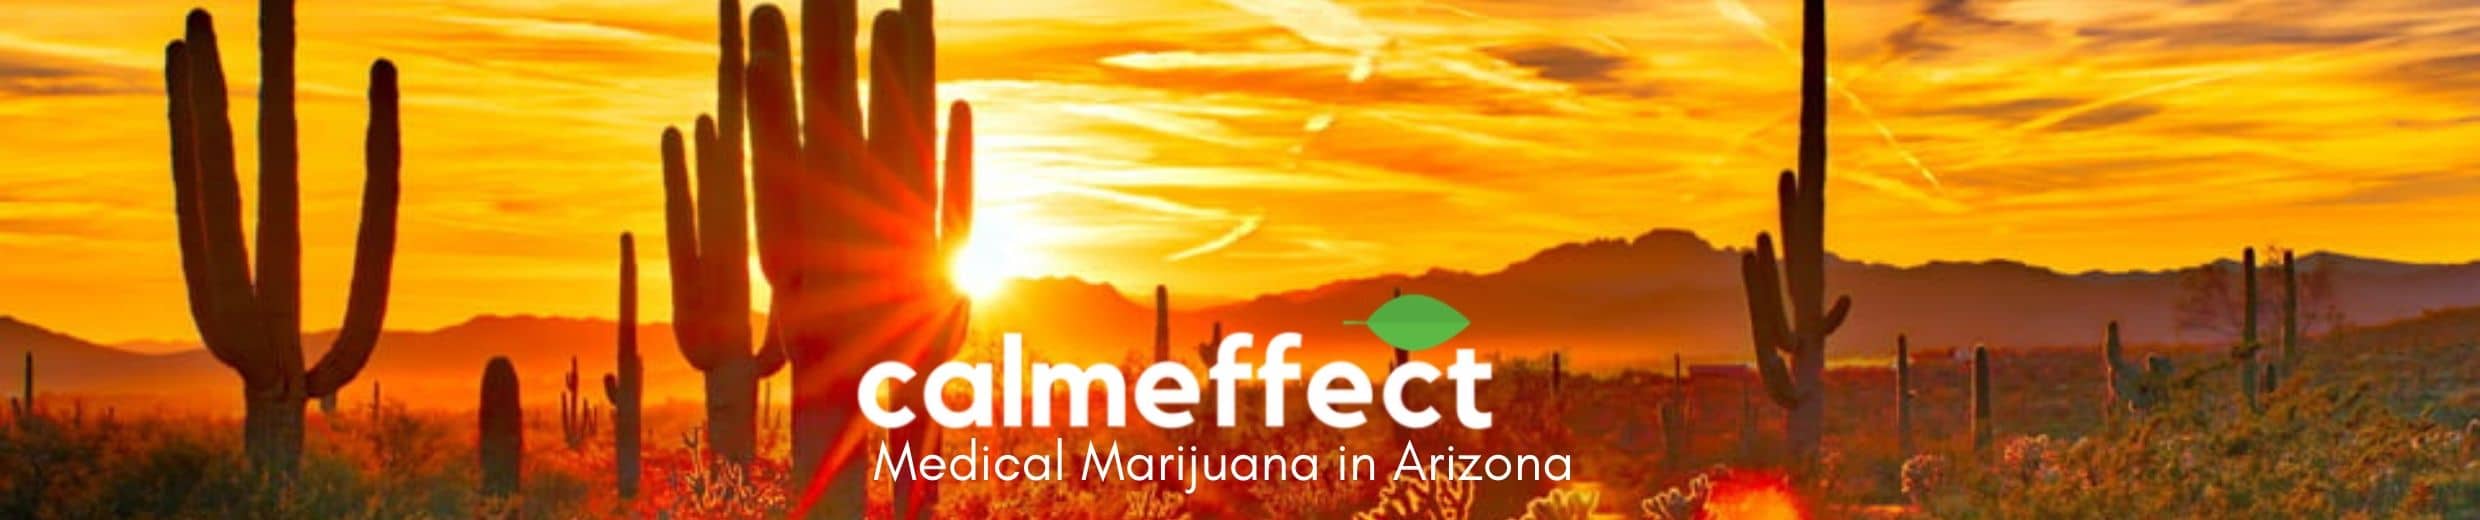 Medical Marijuana in Arizona